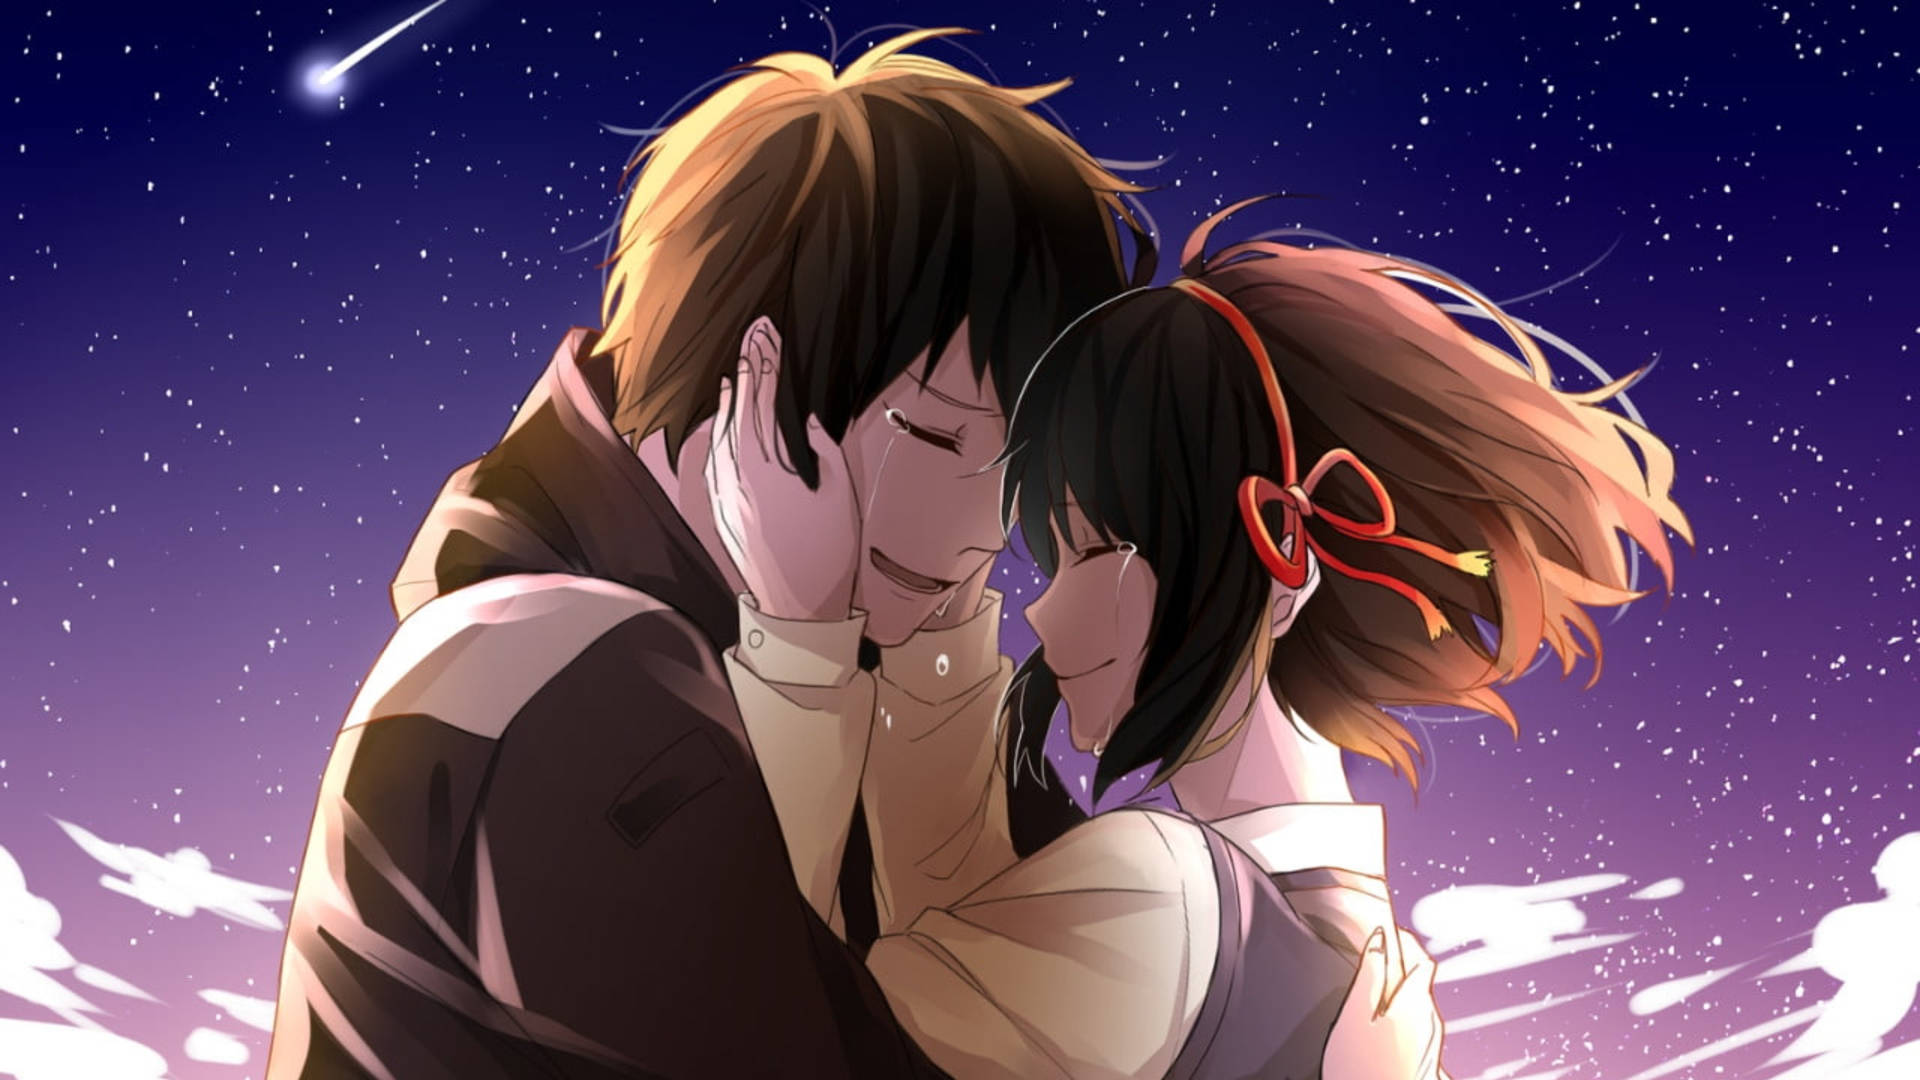 Free Cute Anime Couple Wallpaper Downloads, [100+] Cute Anime Couple  Wallpapers for FREE 